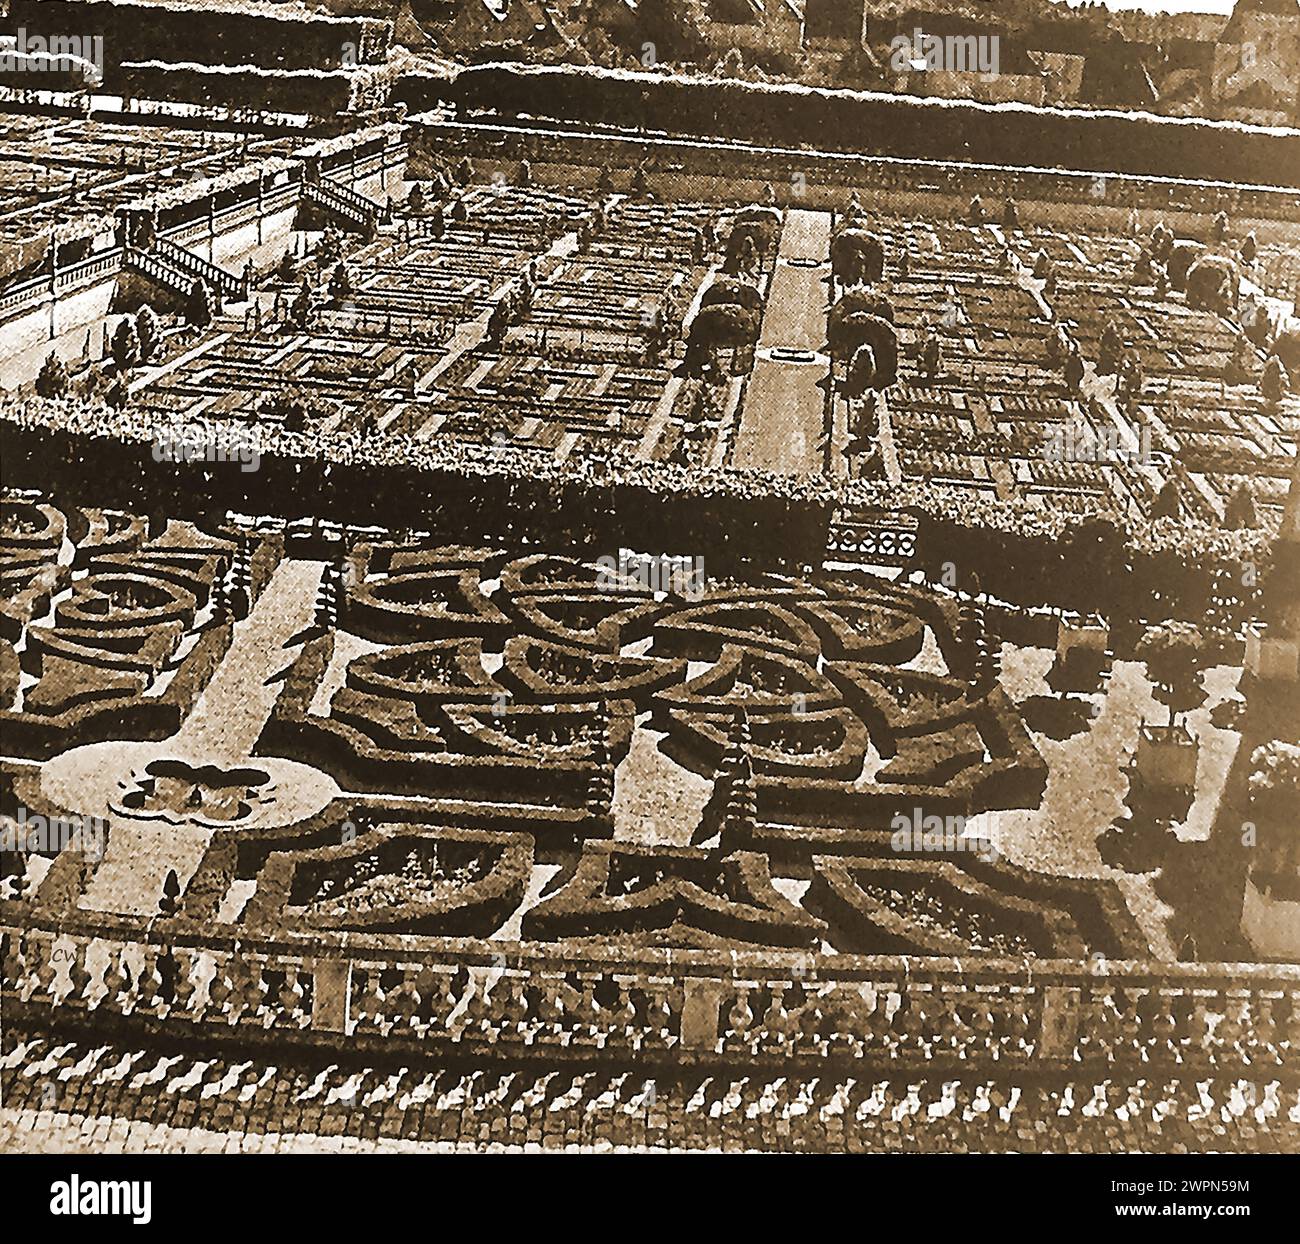 Frankreich 1939 - die Gärten von Villandry - Frankreich 1939 - Les jardins de Villandry Stockfoto